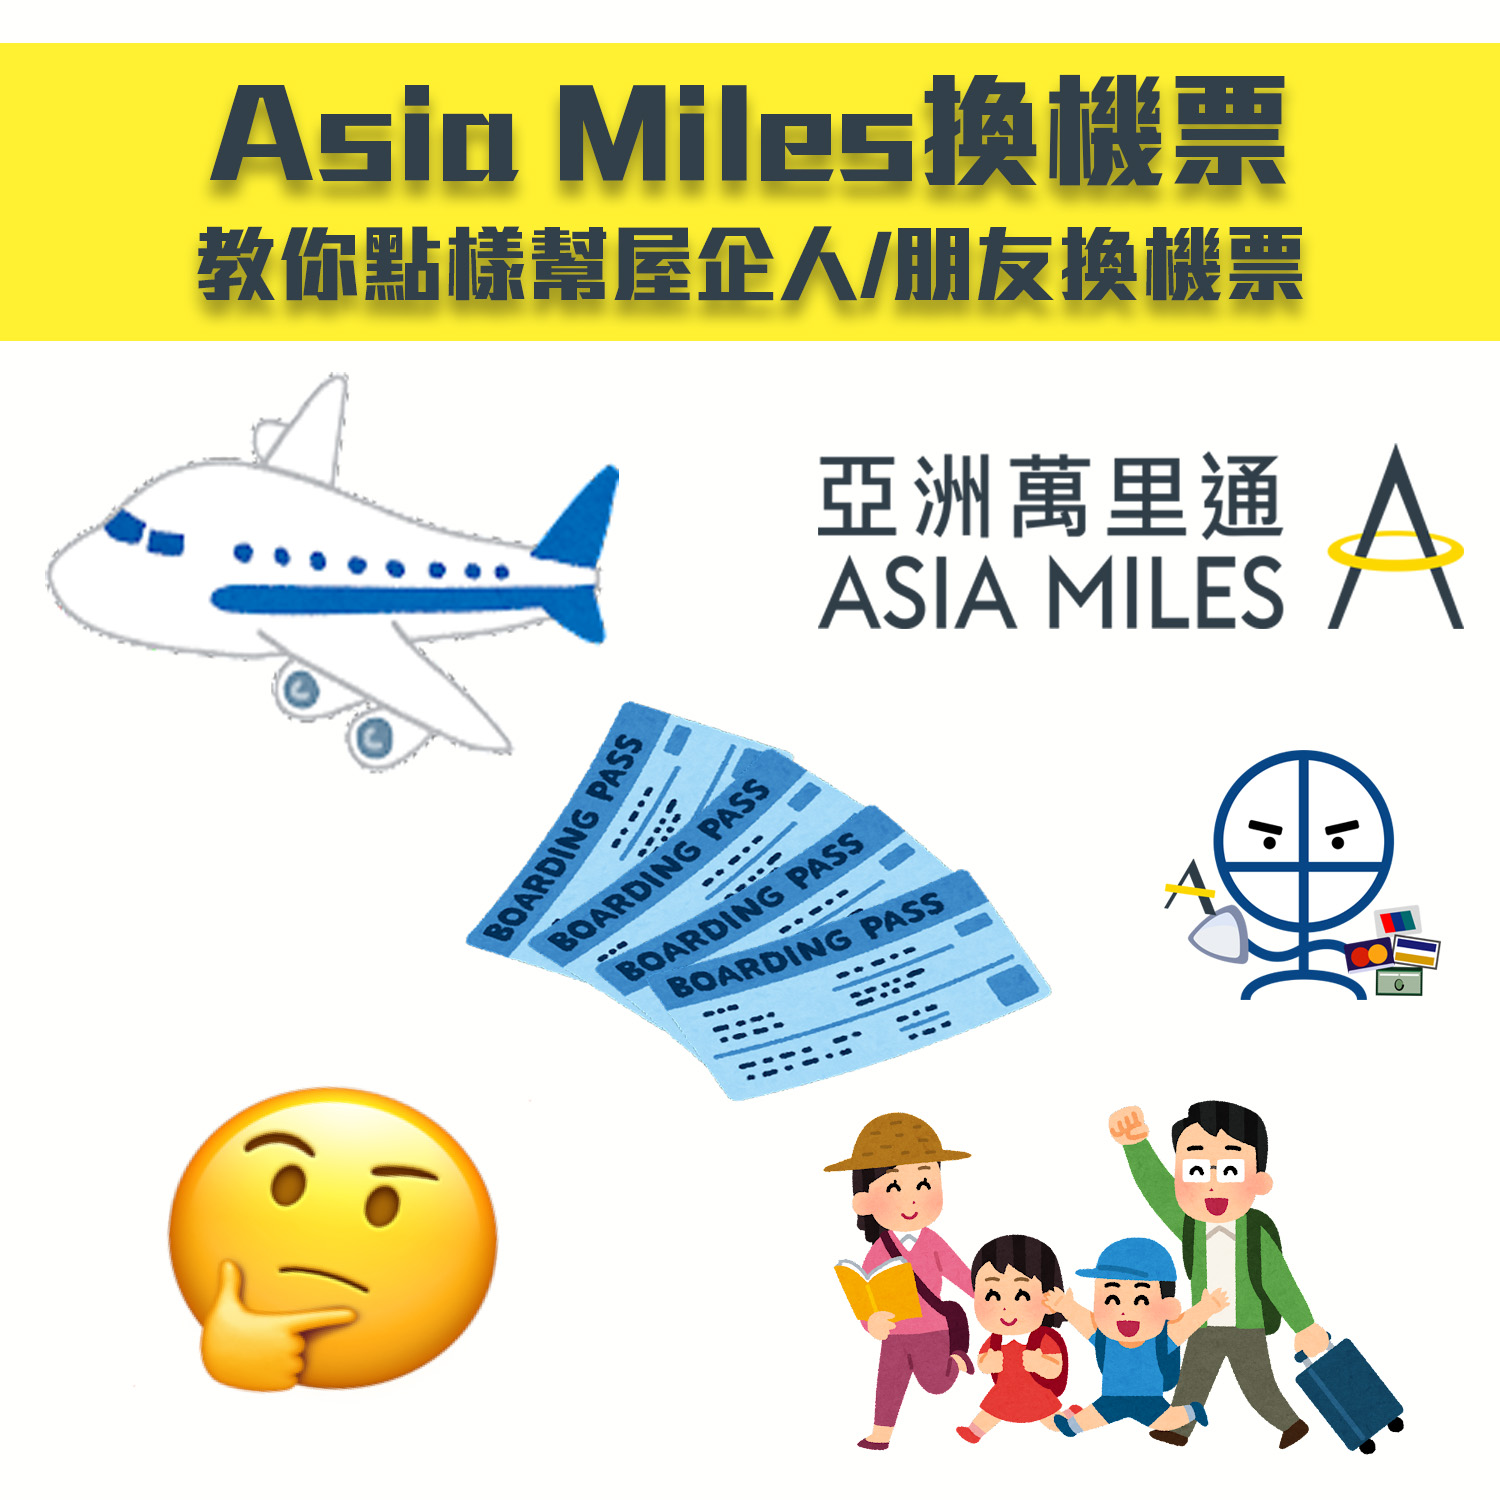 【Asia Miles兌換名單 幫朋友親人/里數換機票】Asia Miles不能轉贈但可幫朋友親人換機票